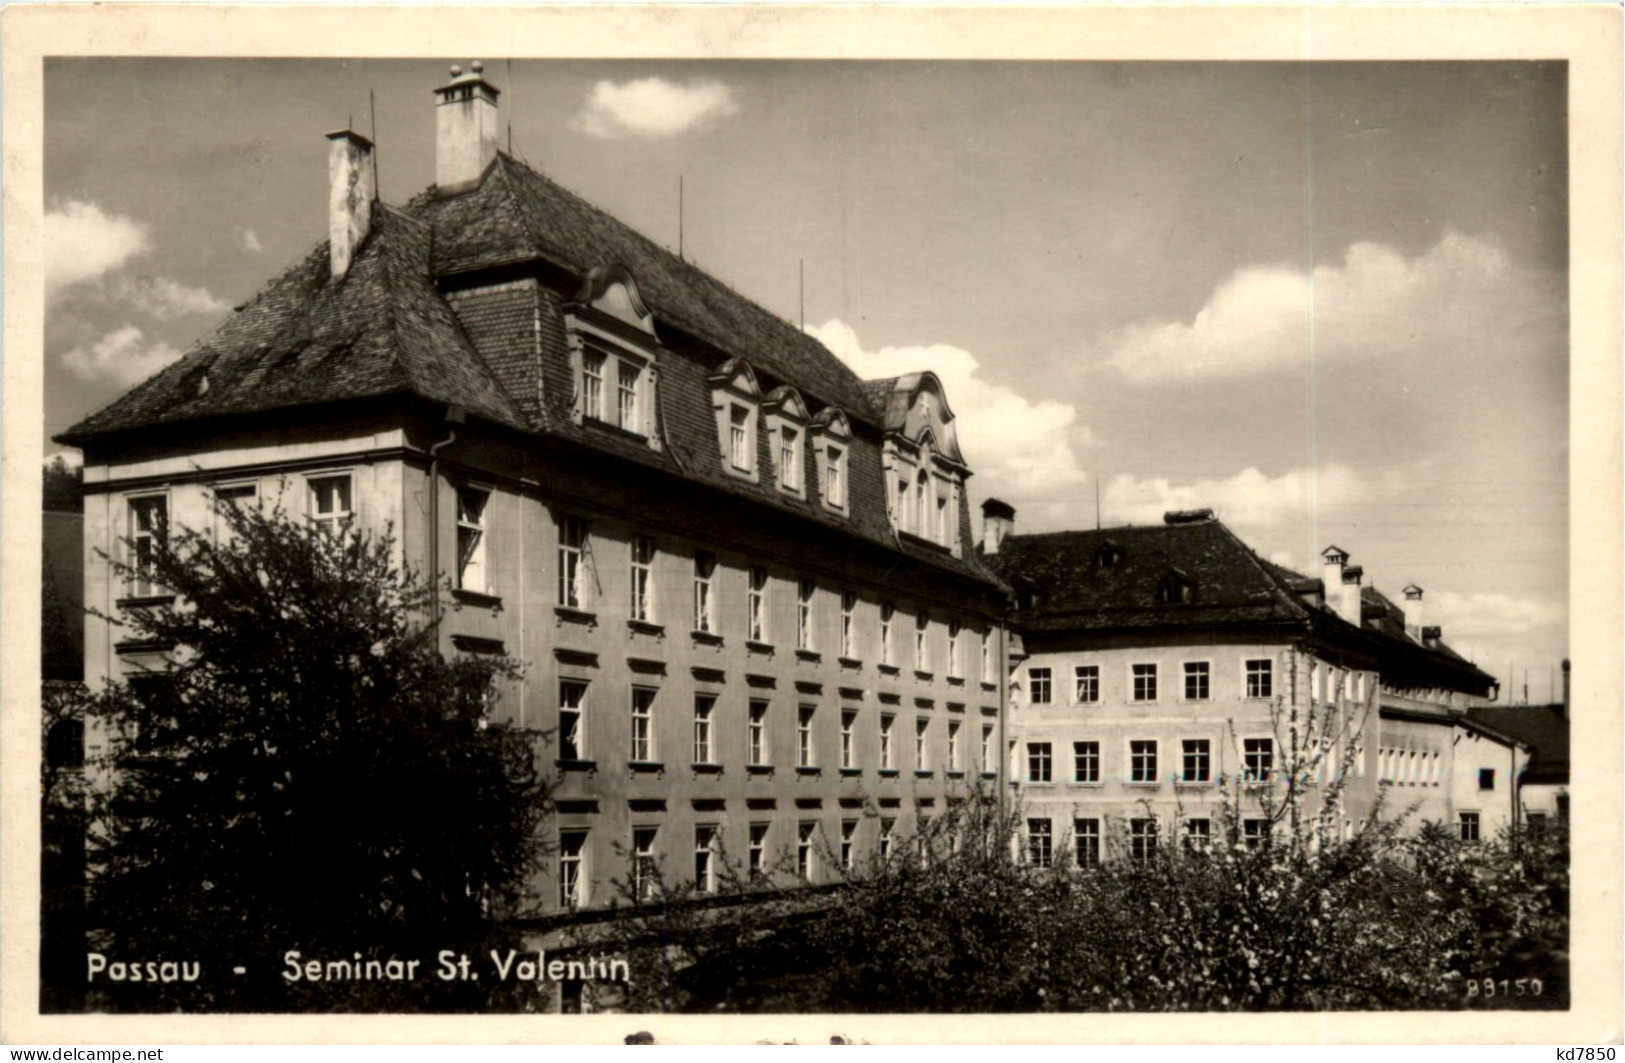 Passau, Seminar St. Valentin - Passau